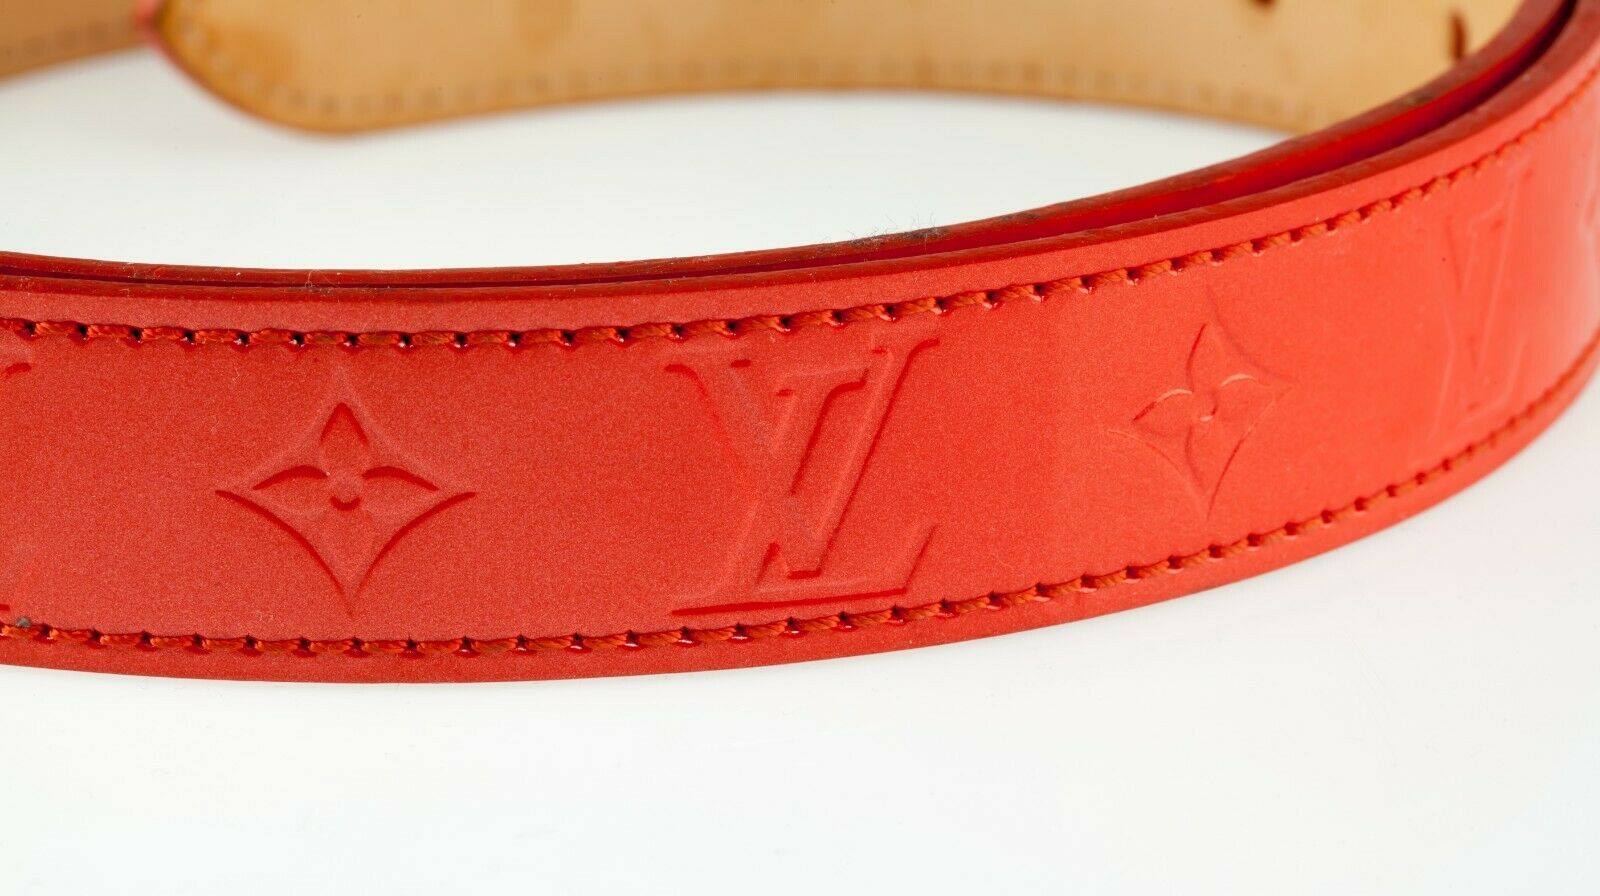 Louis Vuitton Green Vernis Leather Initials Belt 80CM